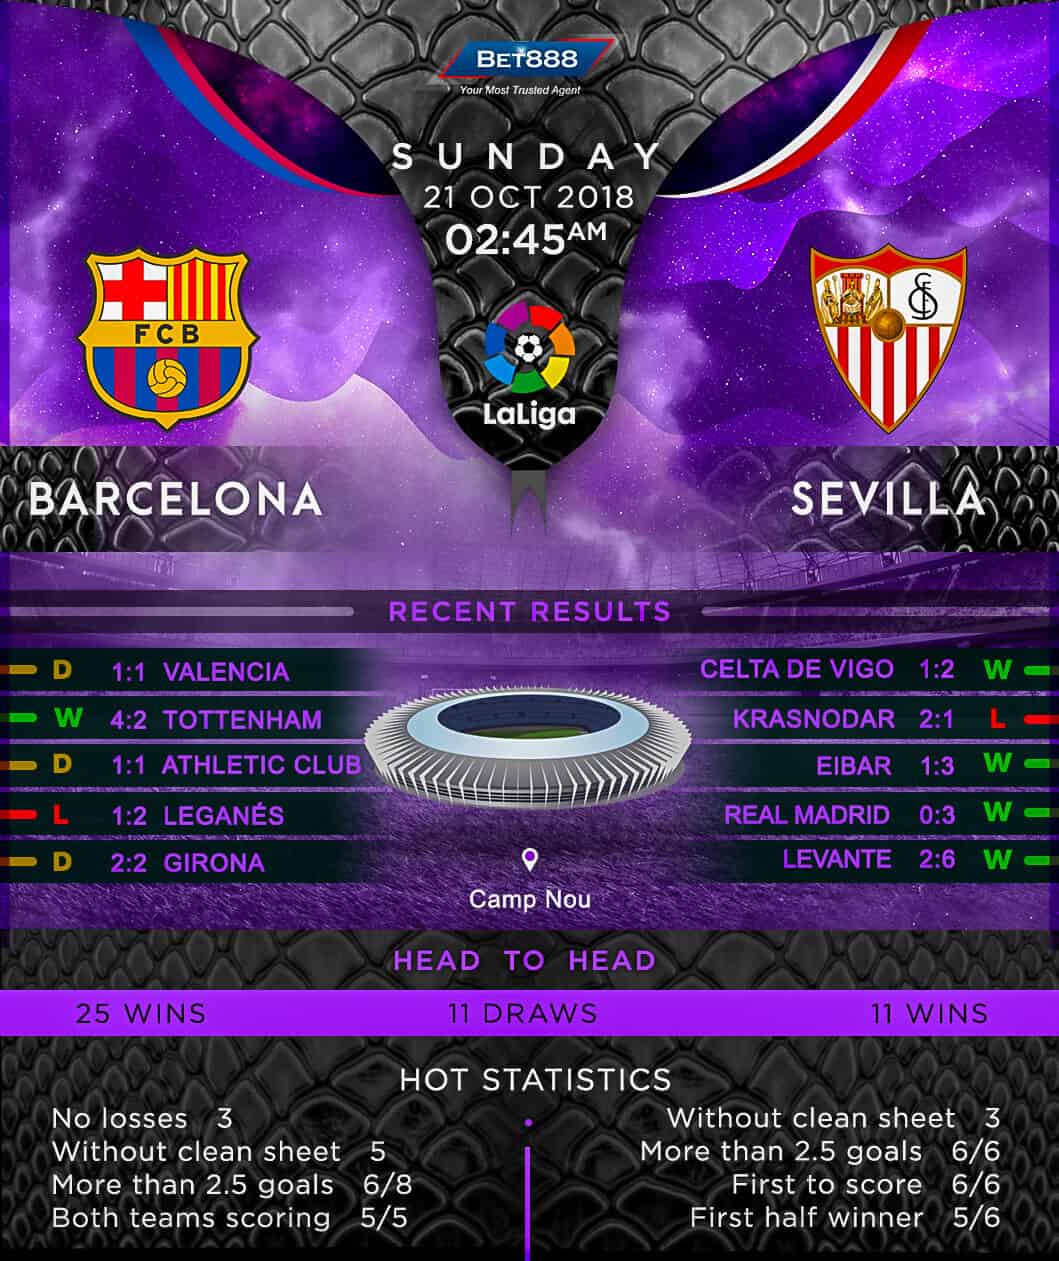 Barcelona vs Sevilla 21/10/18